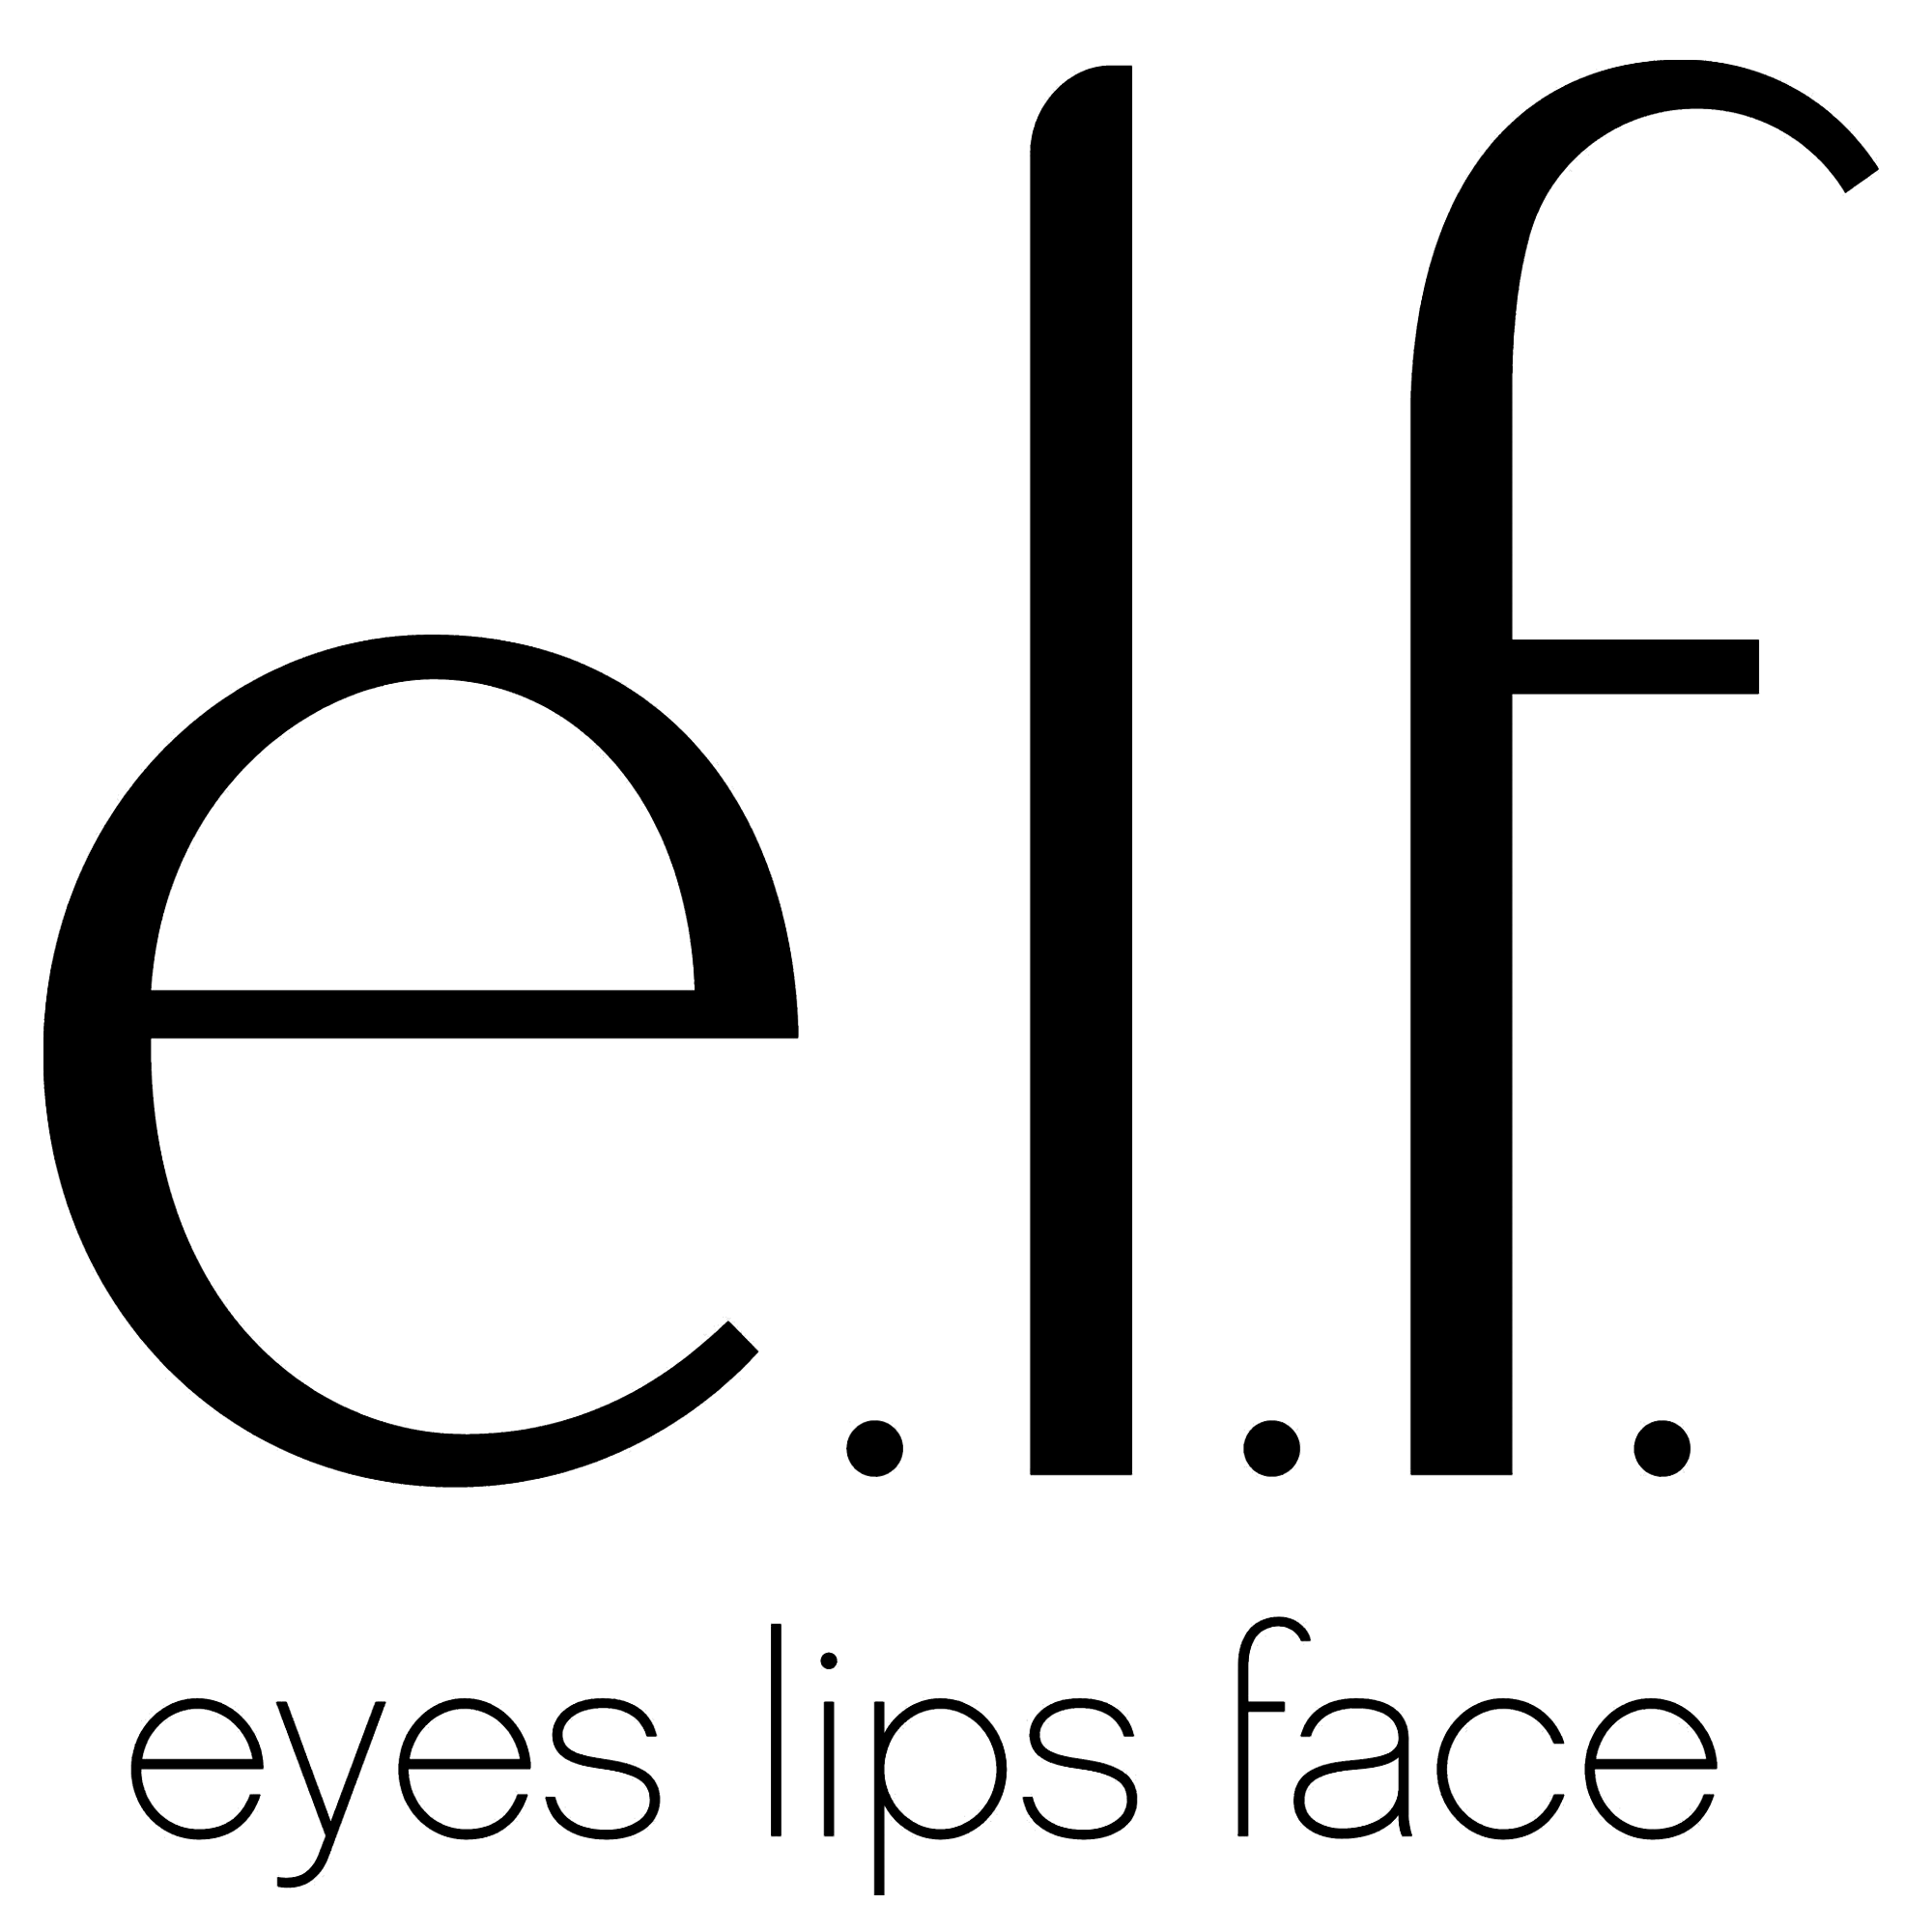 elf_Cosmetics_logo